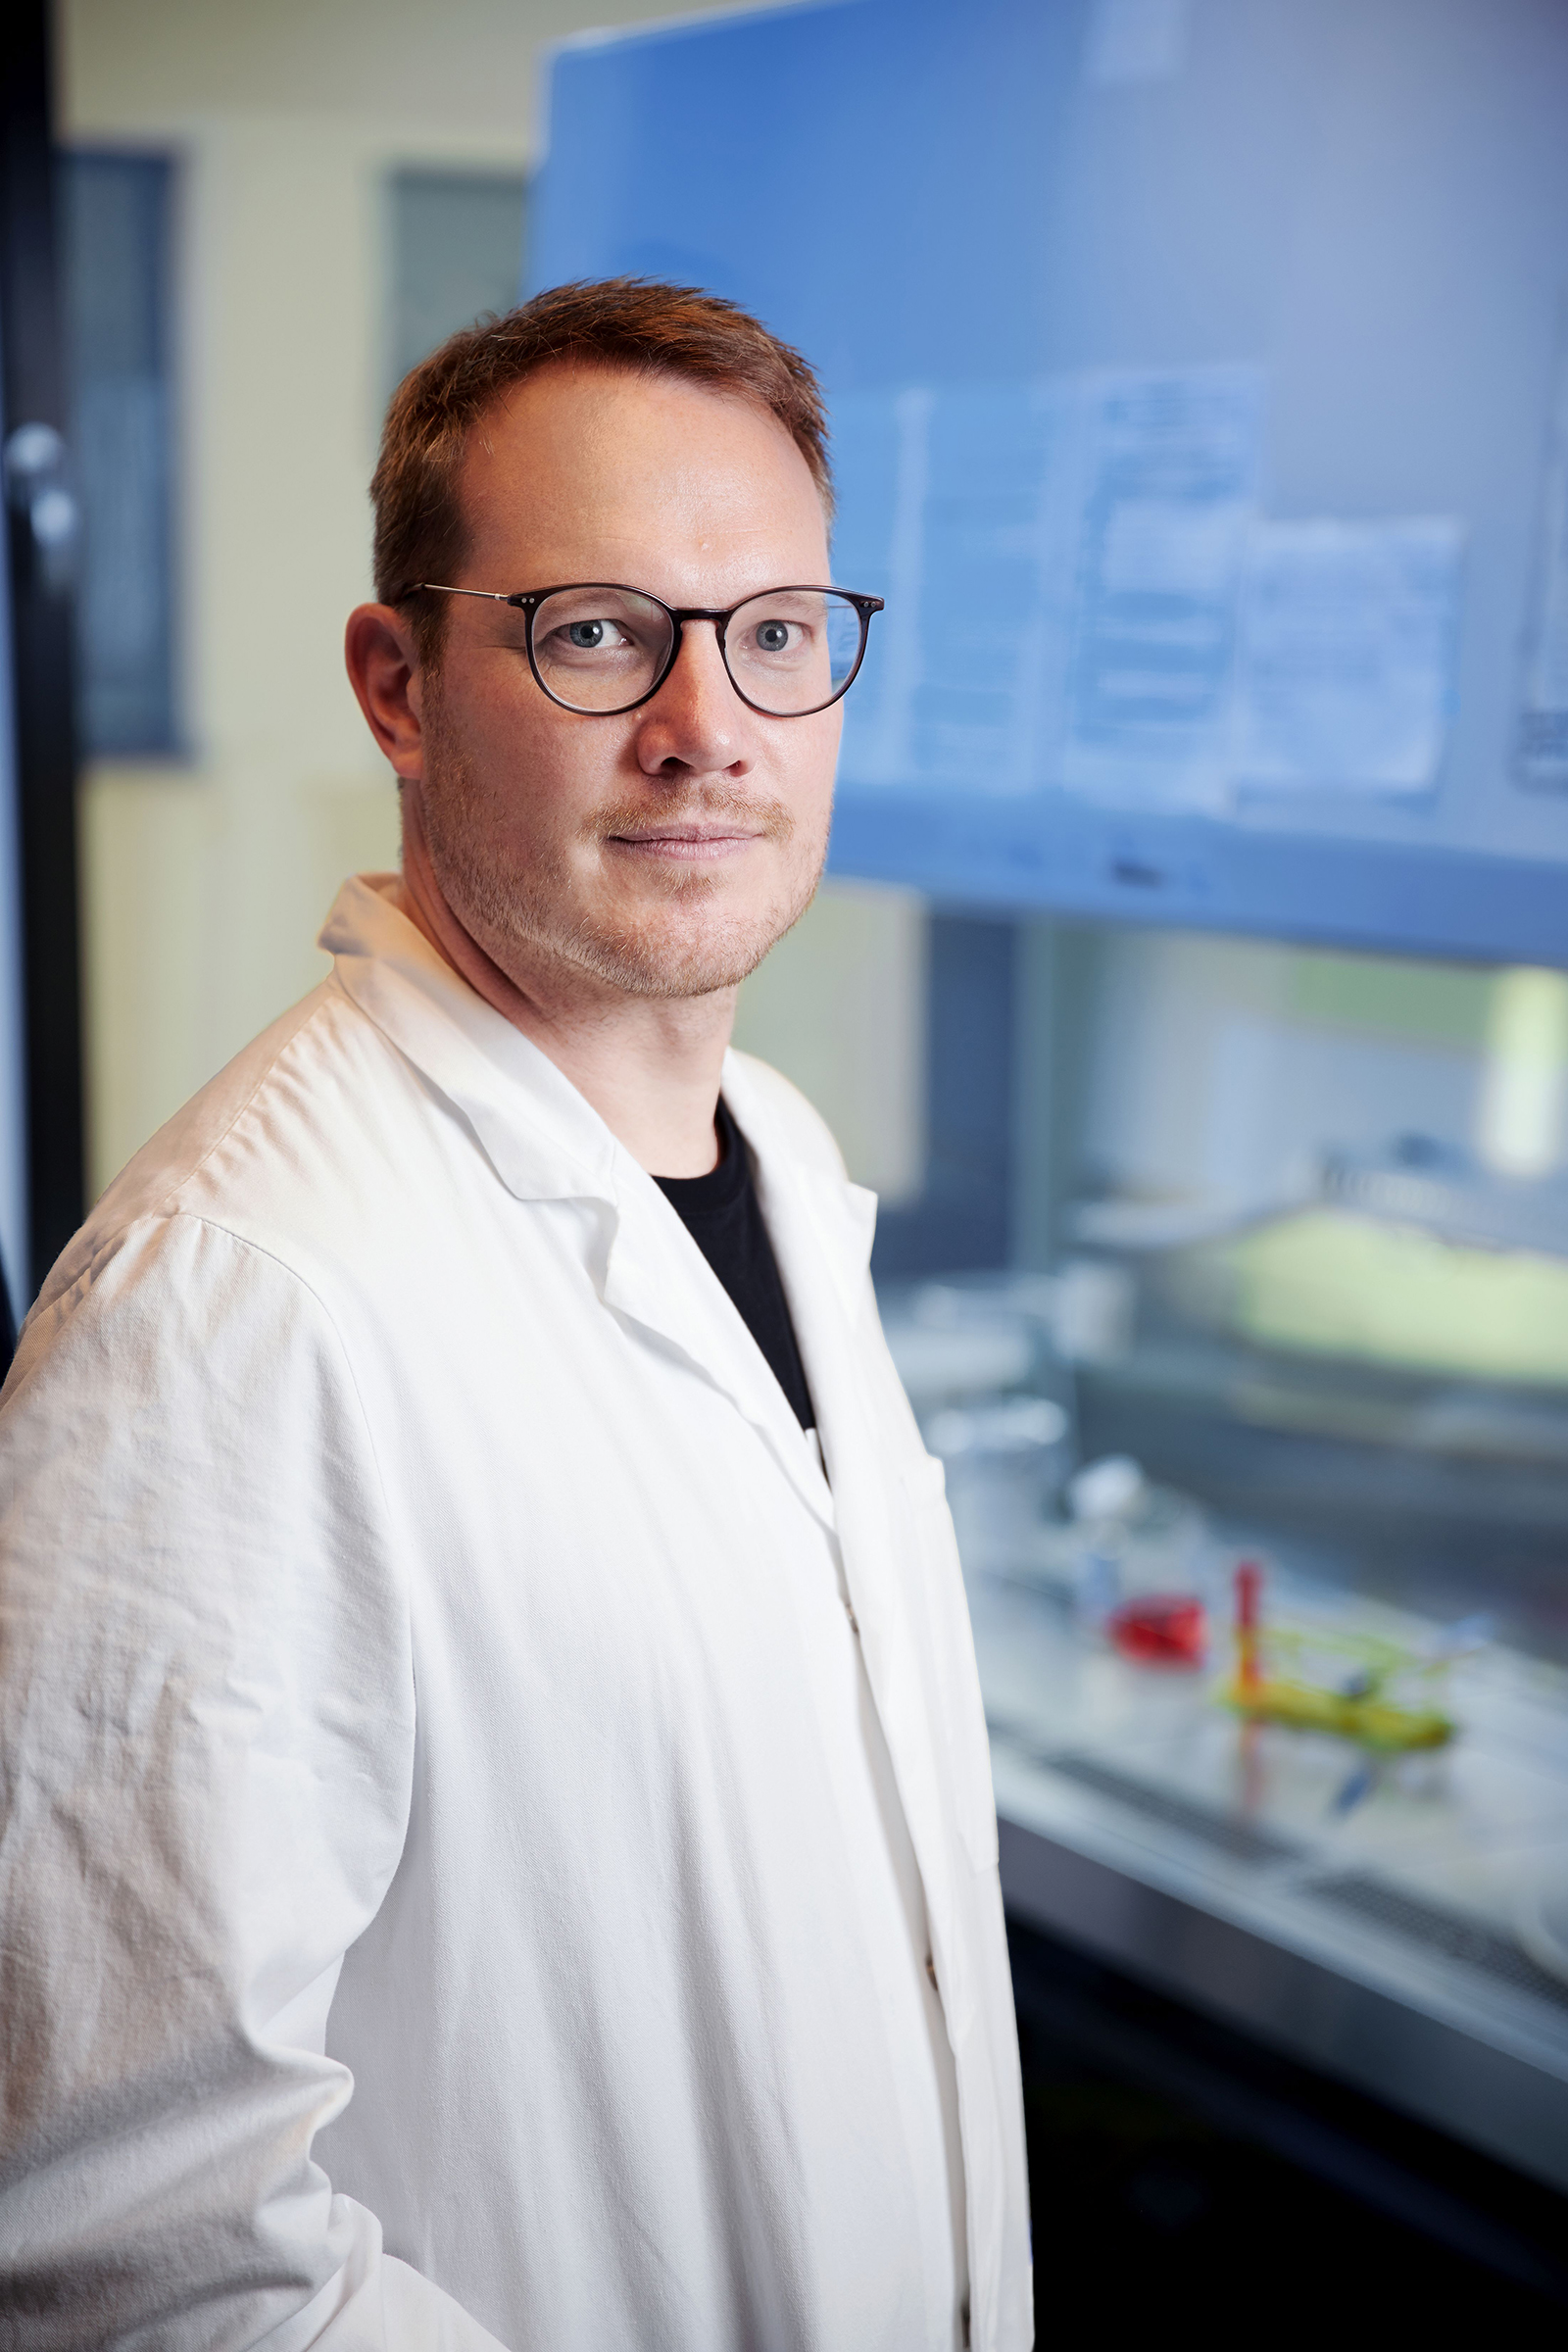 Dr. Sebastian Rakers, founder and managing director of Bluu GmbH in the laboratory.